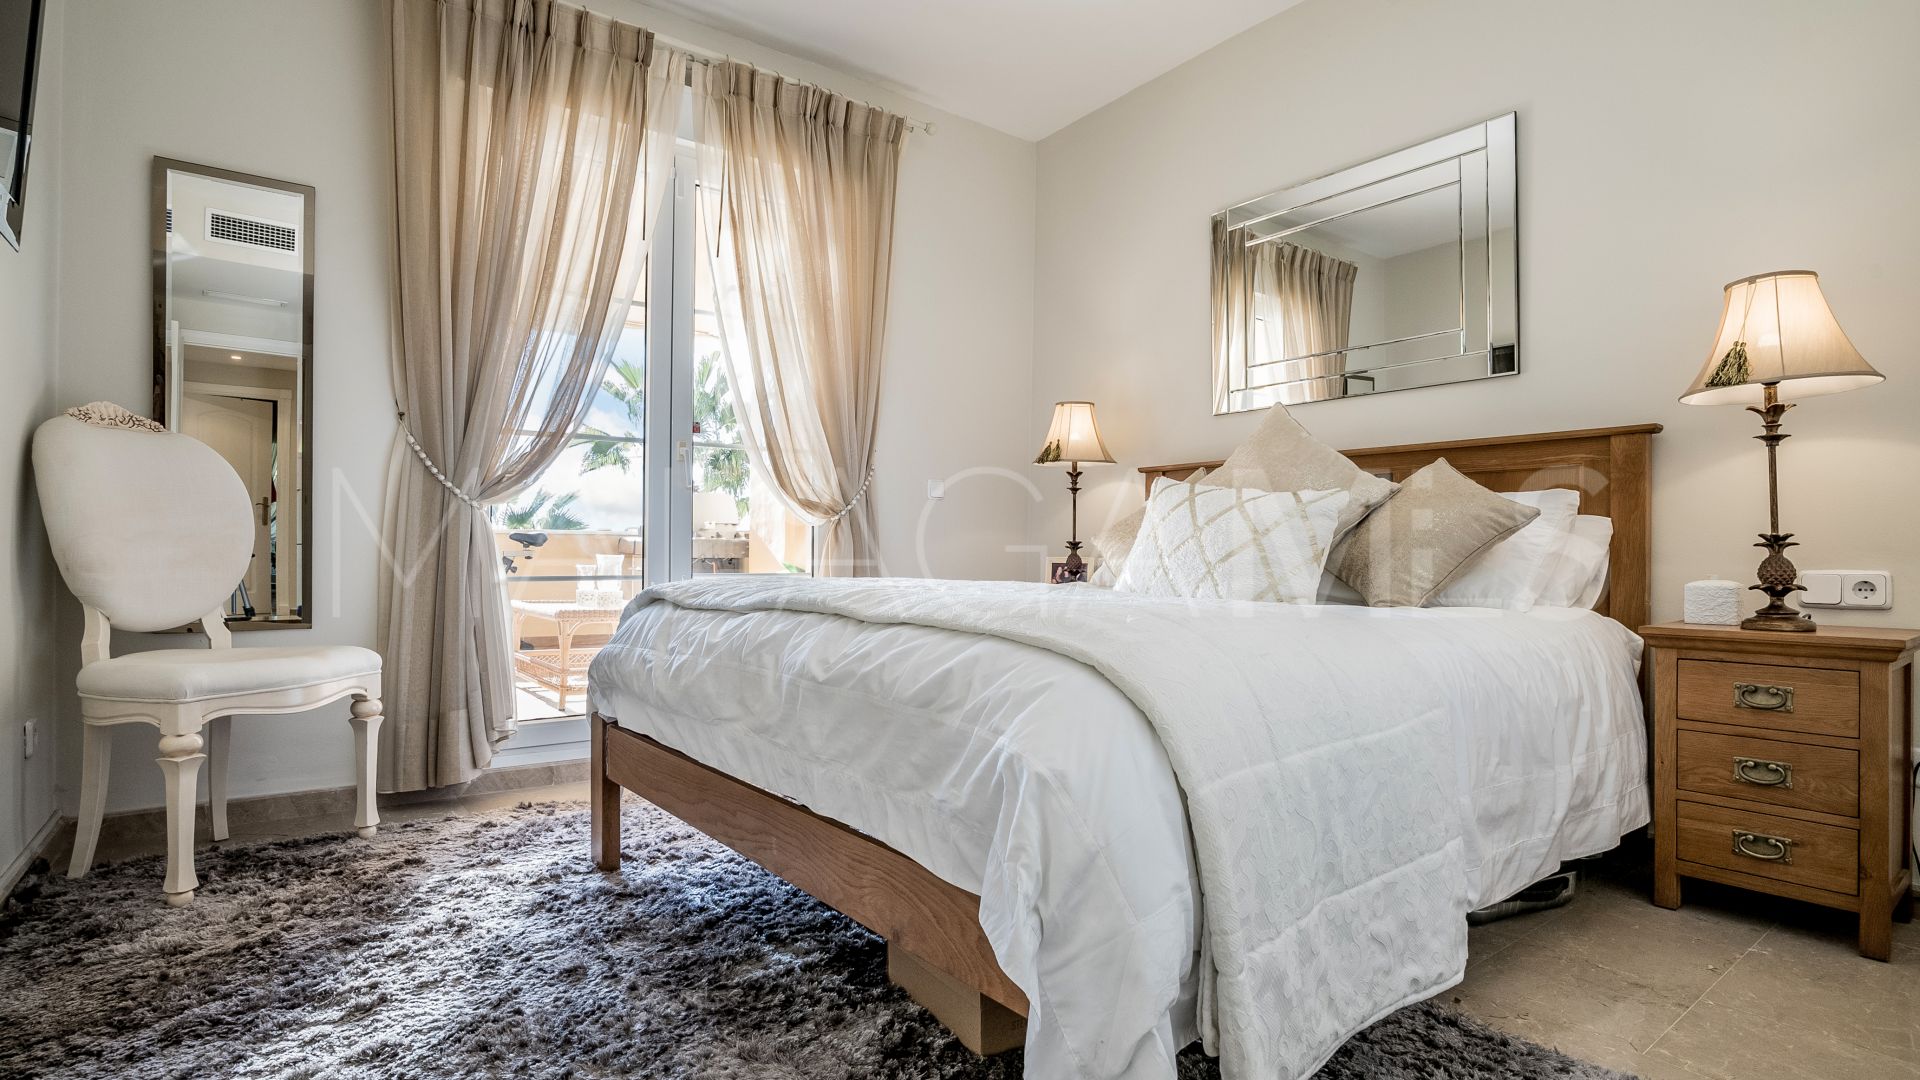 Apartamento for sale in Cumbres del Rodeo de 3 bedrooms